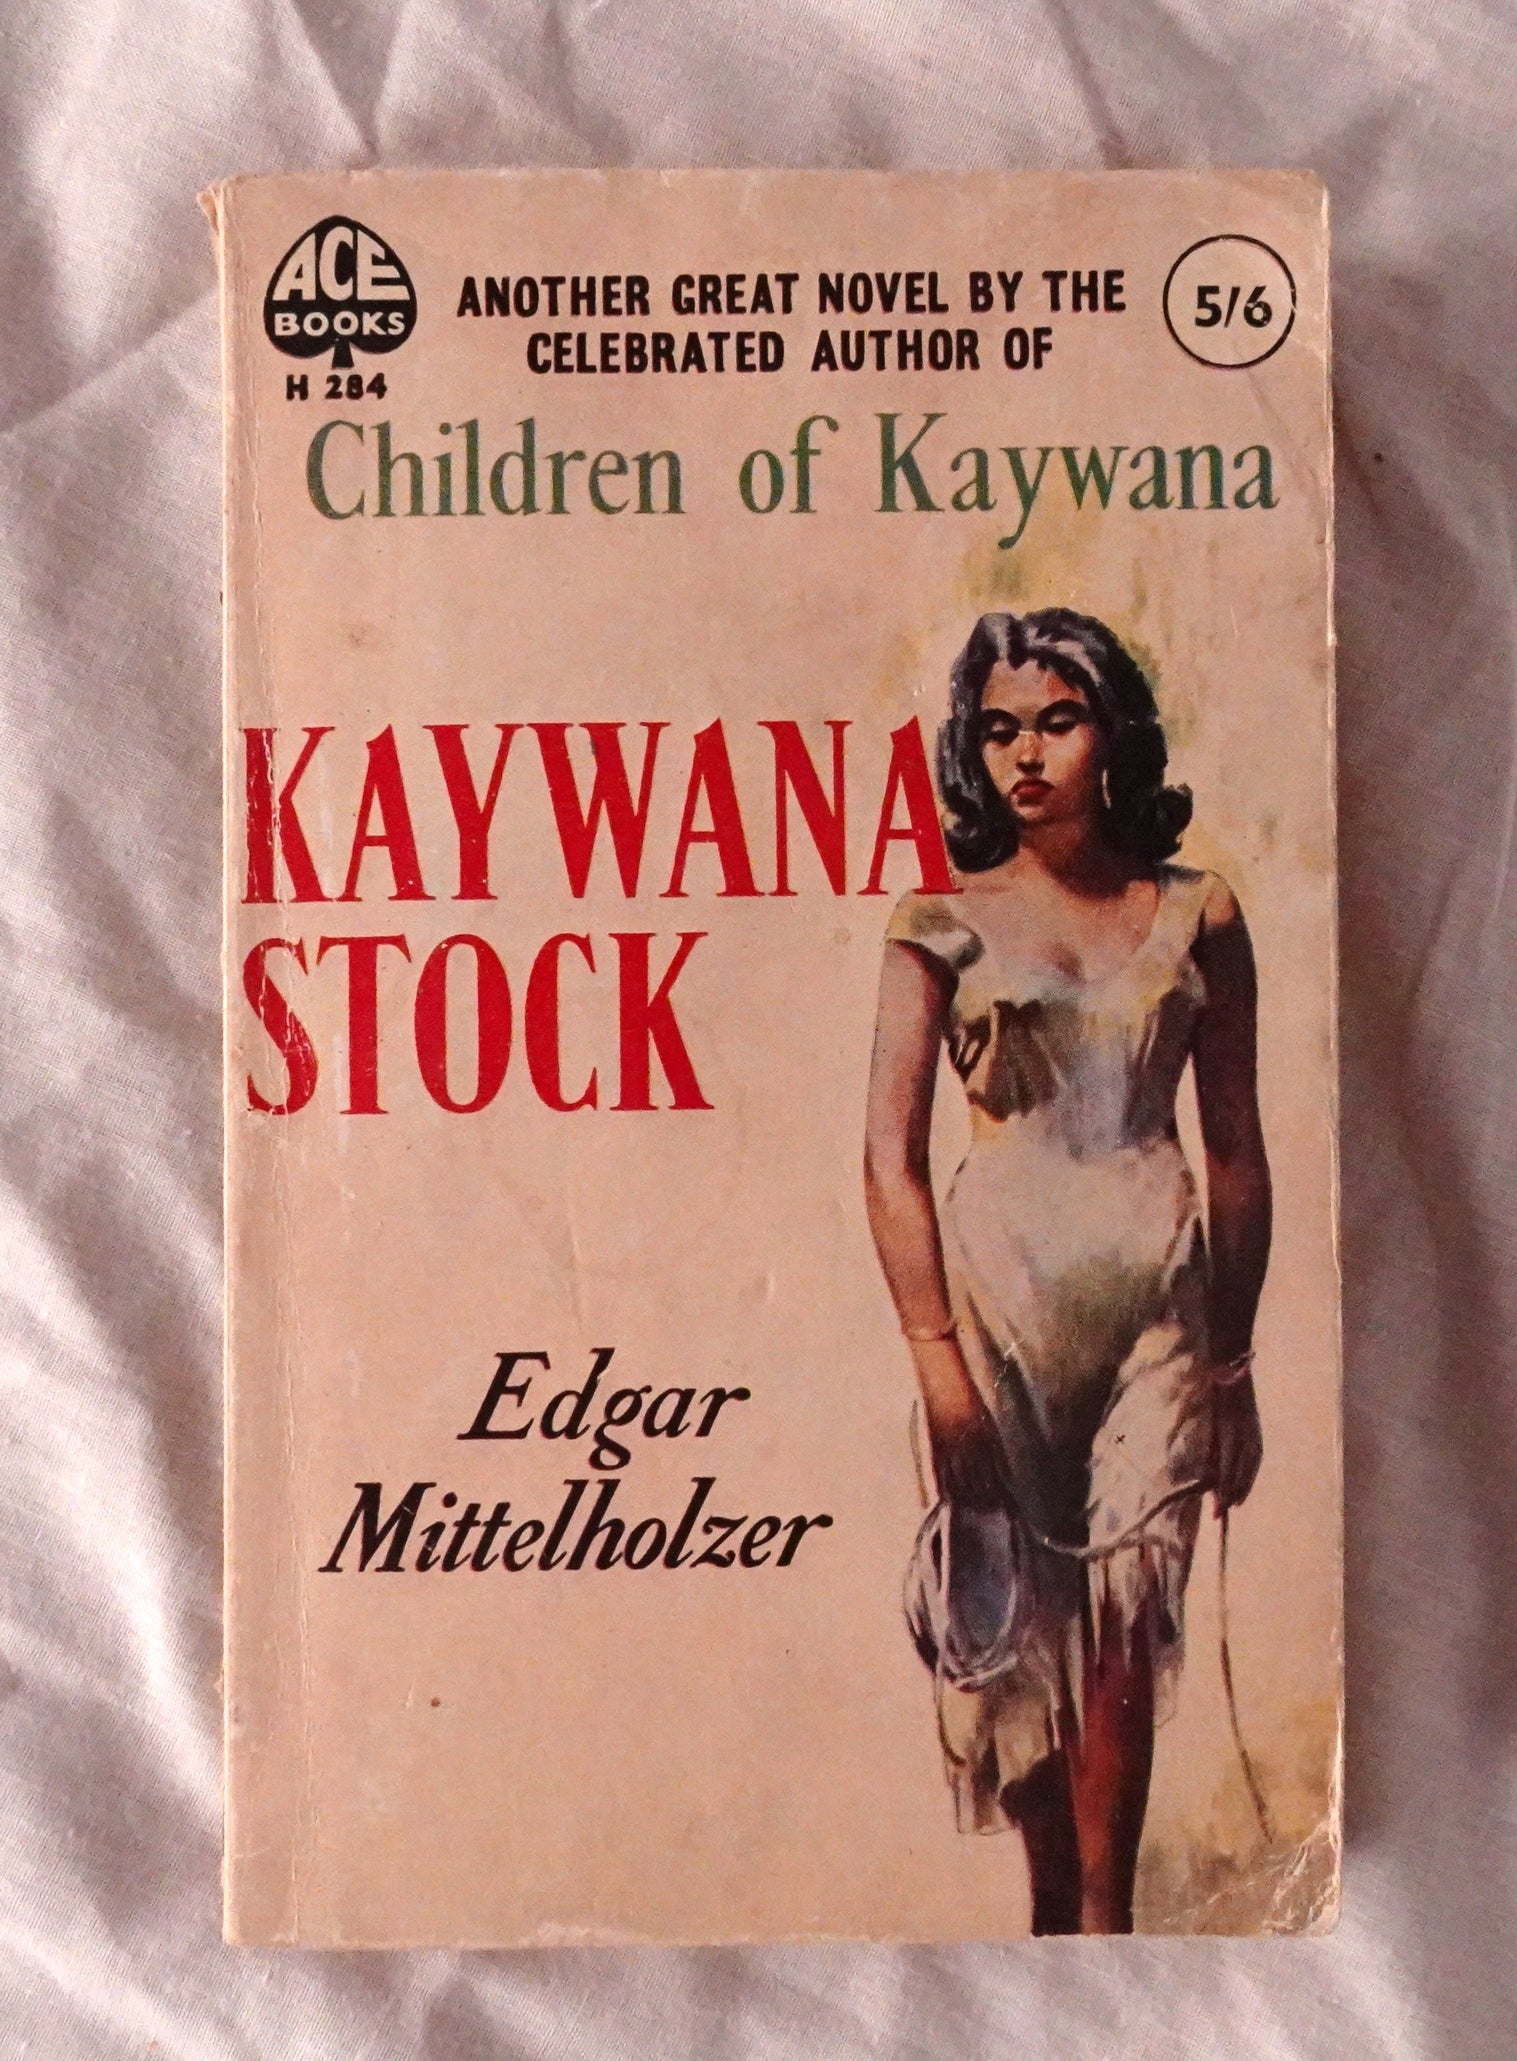 Kaywana Stock  by Edgar Mittelholzer  Kaywana Trilogy book 2